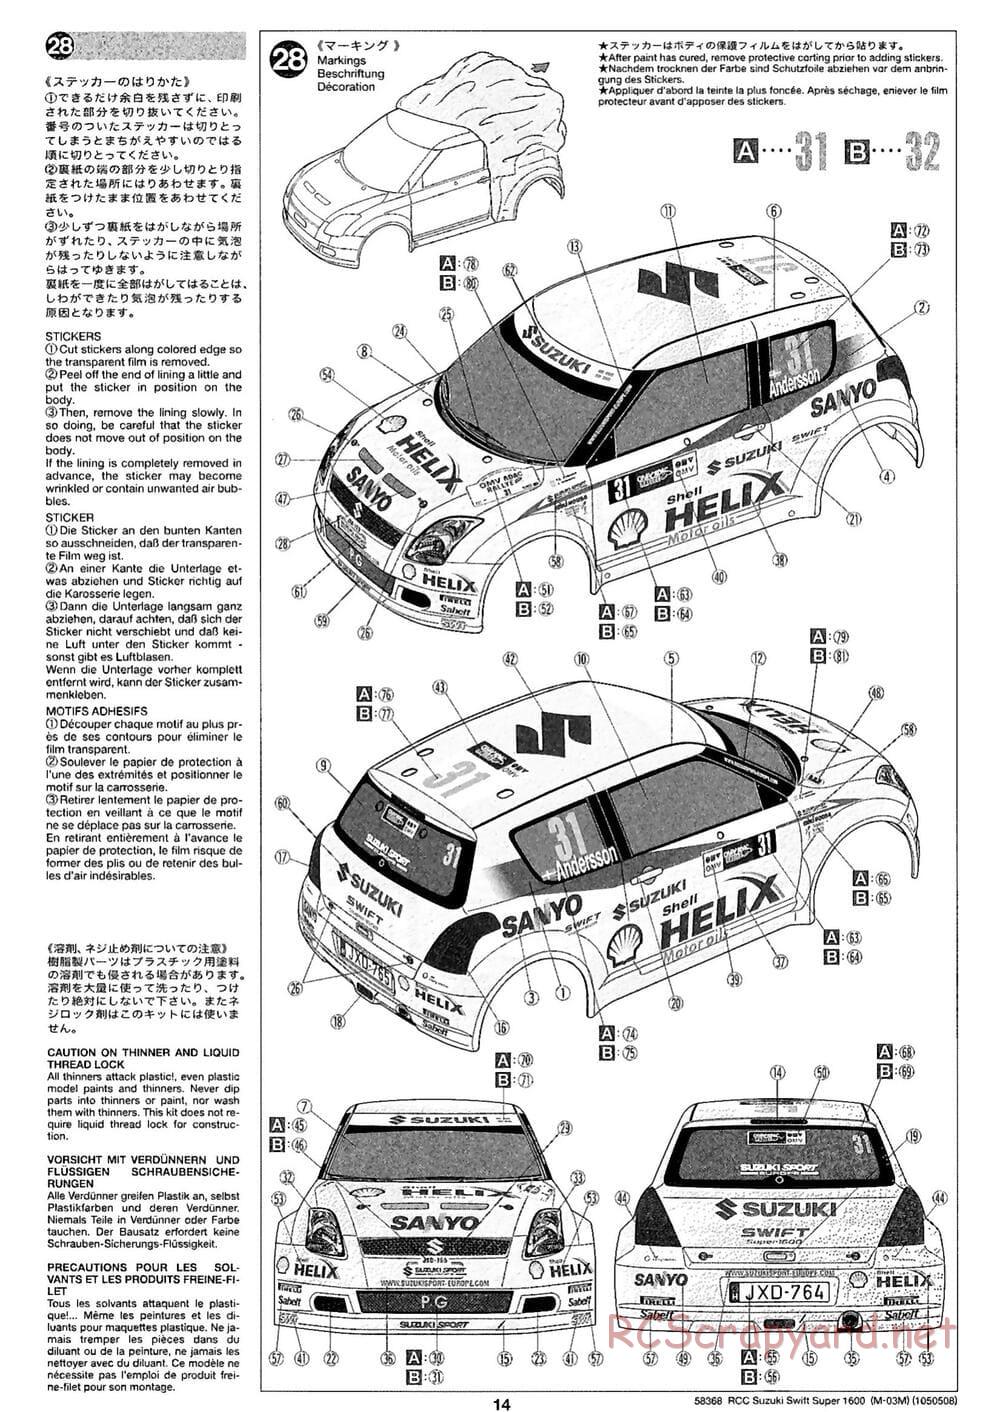 Tamiya - Suzuki Swift Super 1600 - M03M Chassis - Manual - Page 14